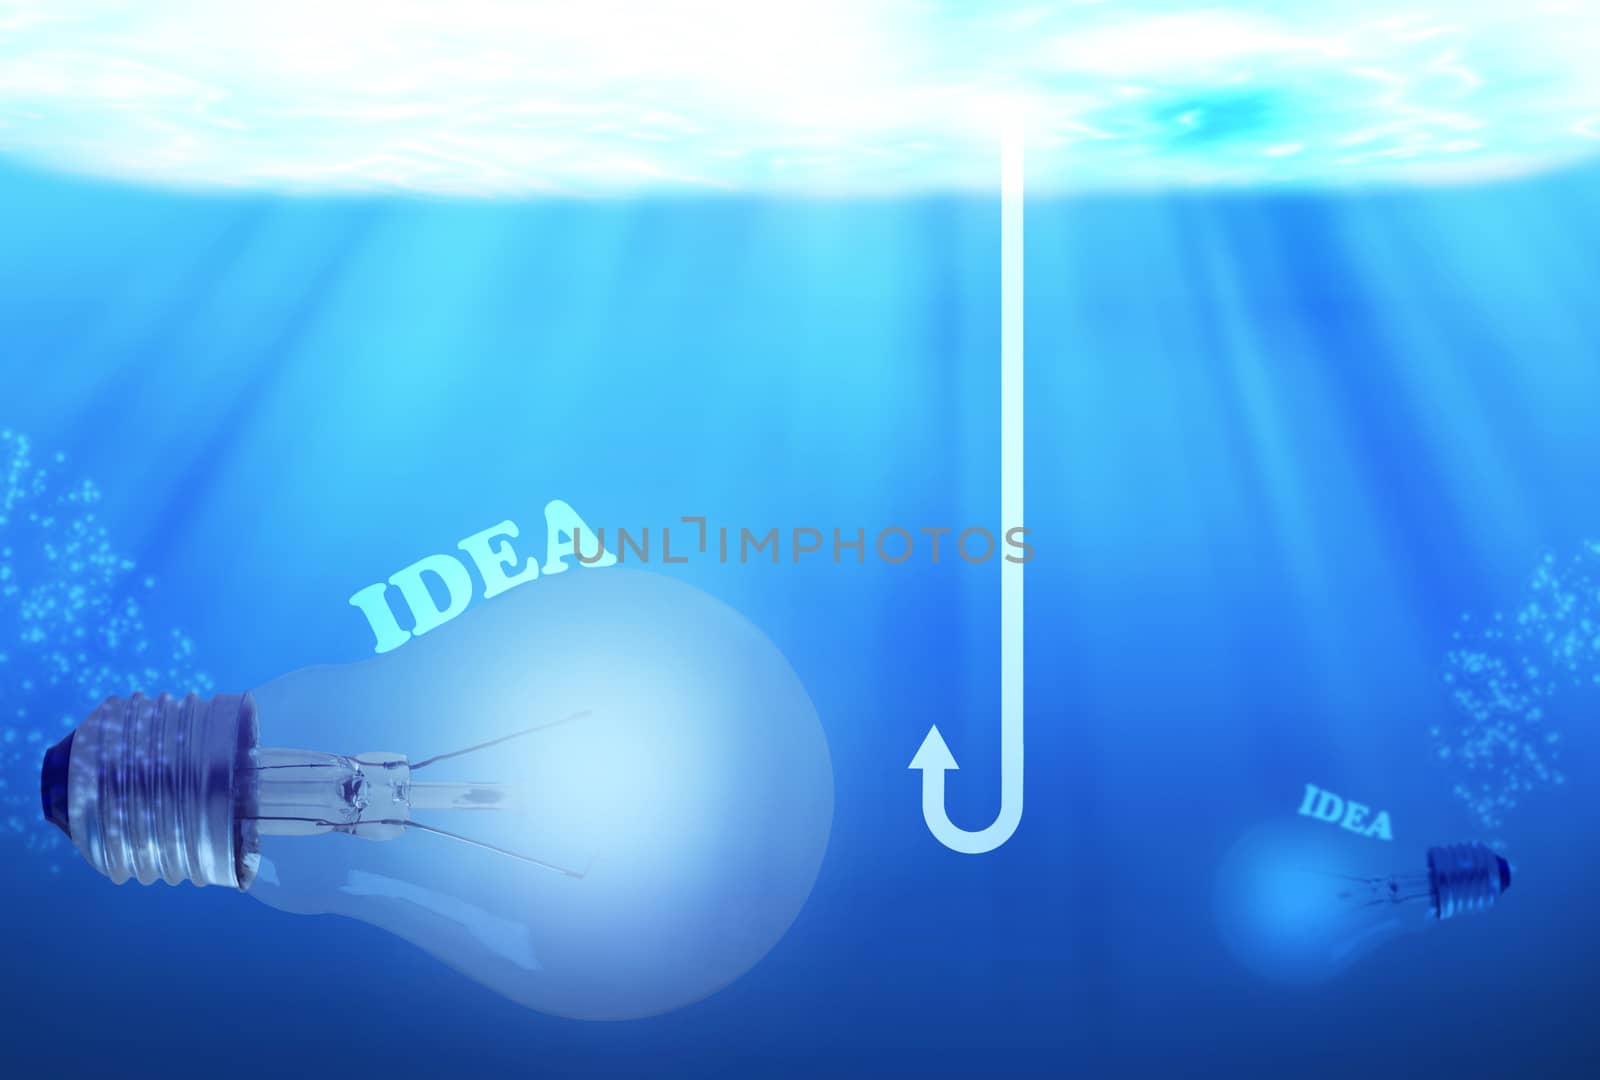 Business Creativity Idea Concept by Fnatic12